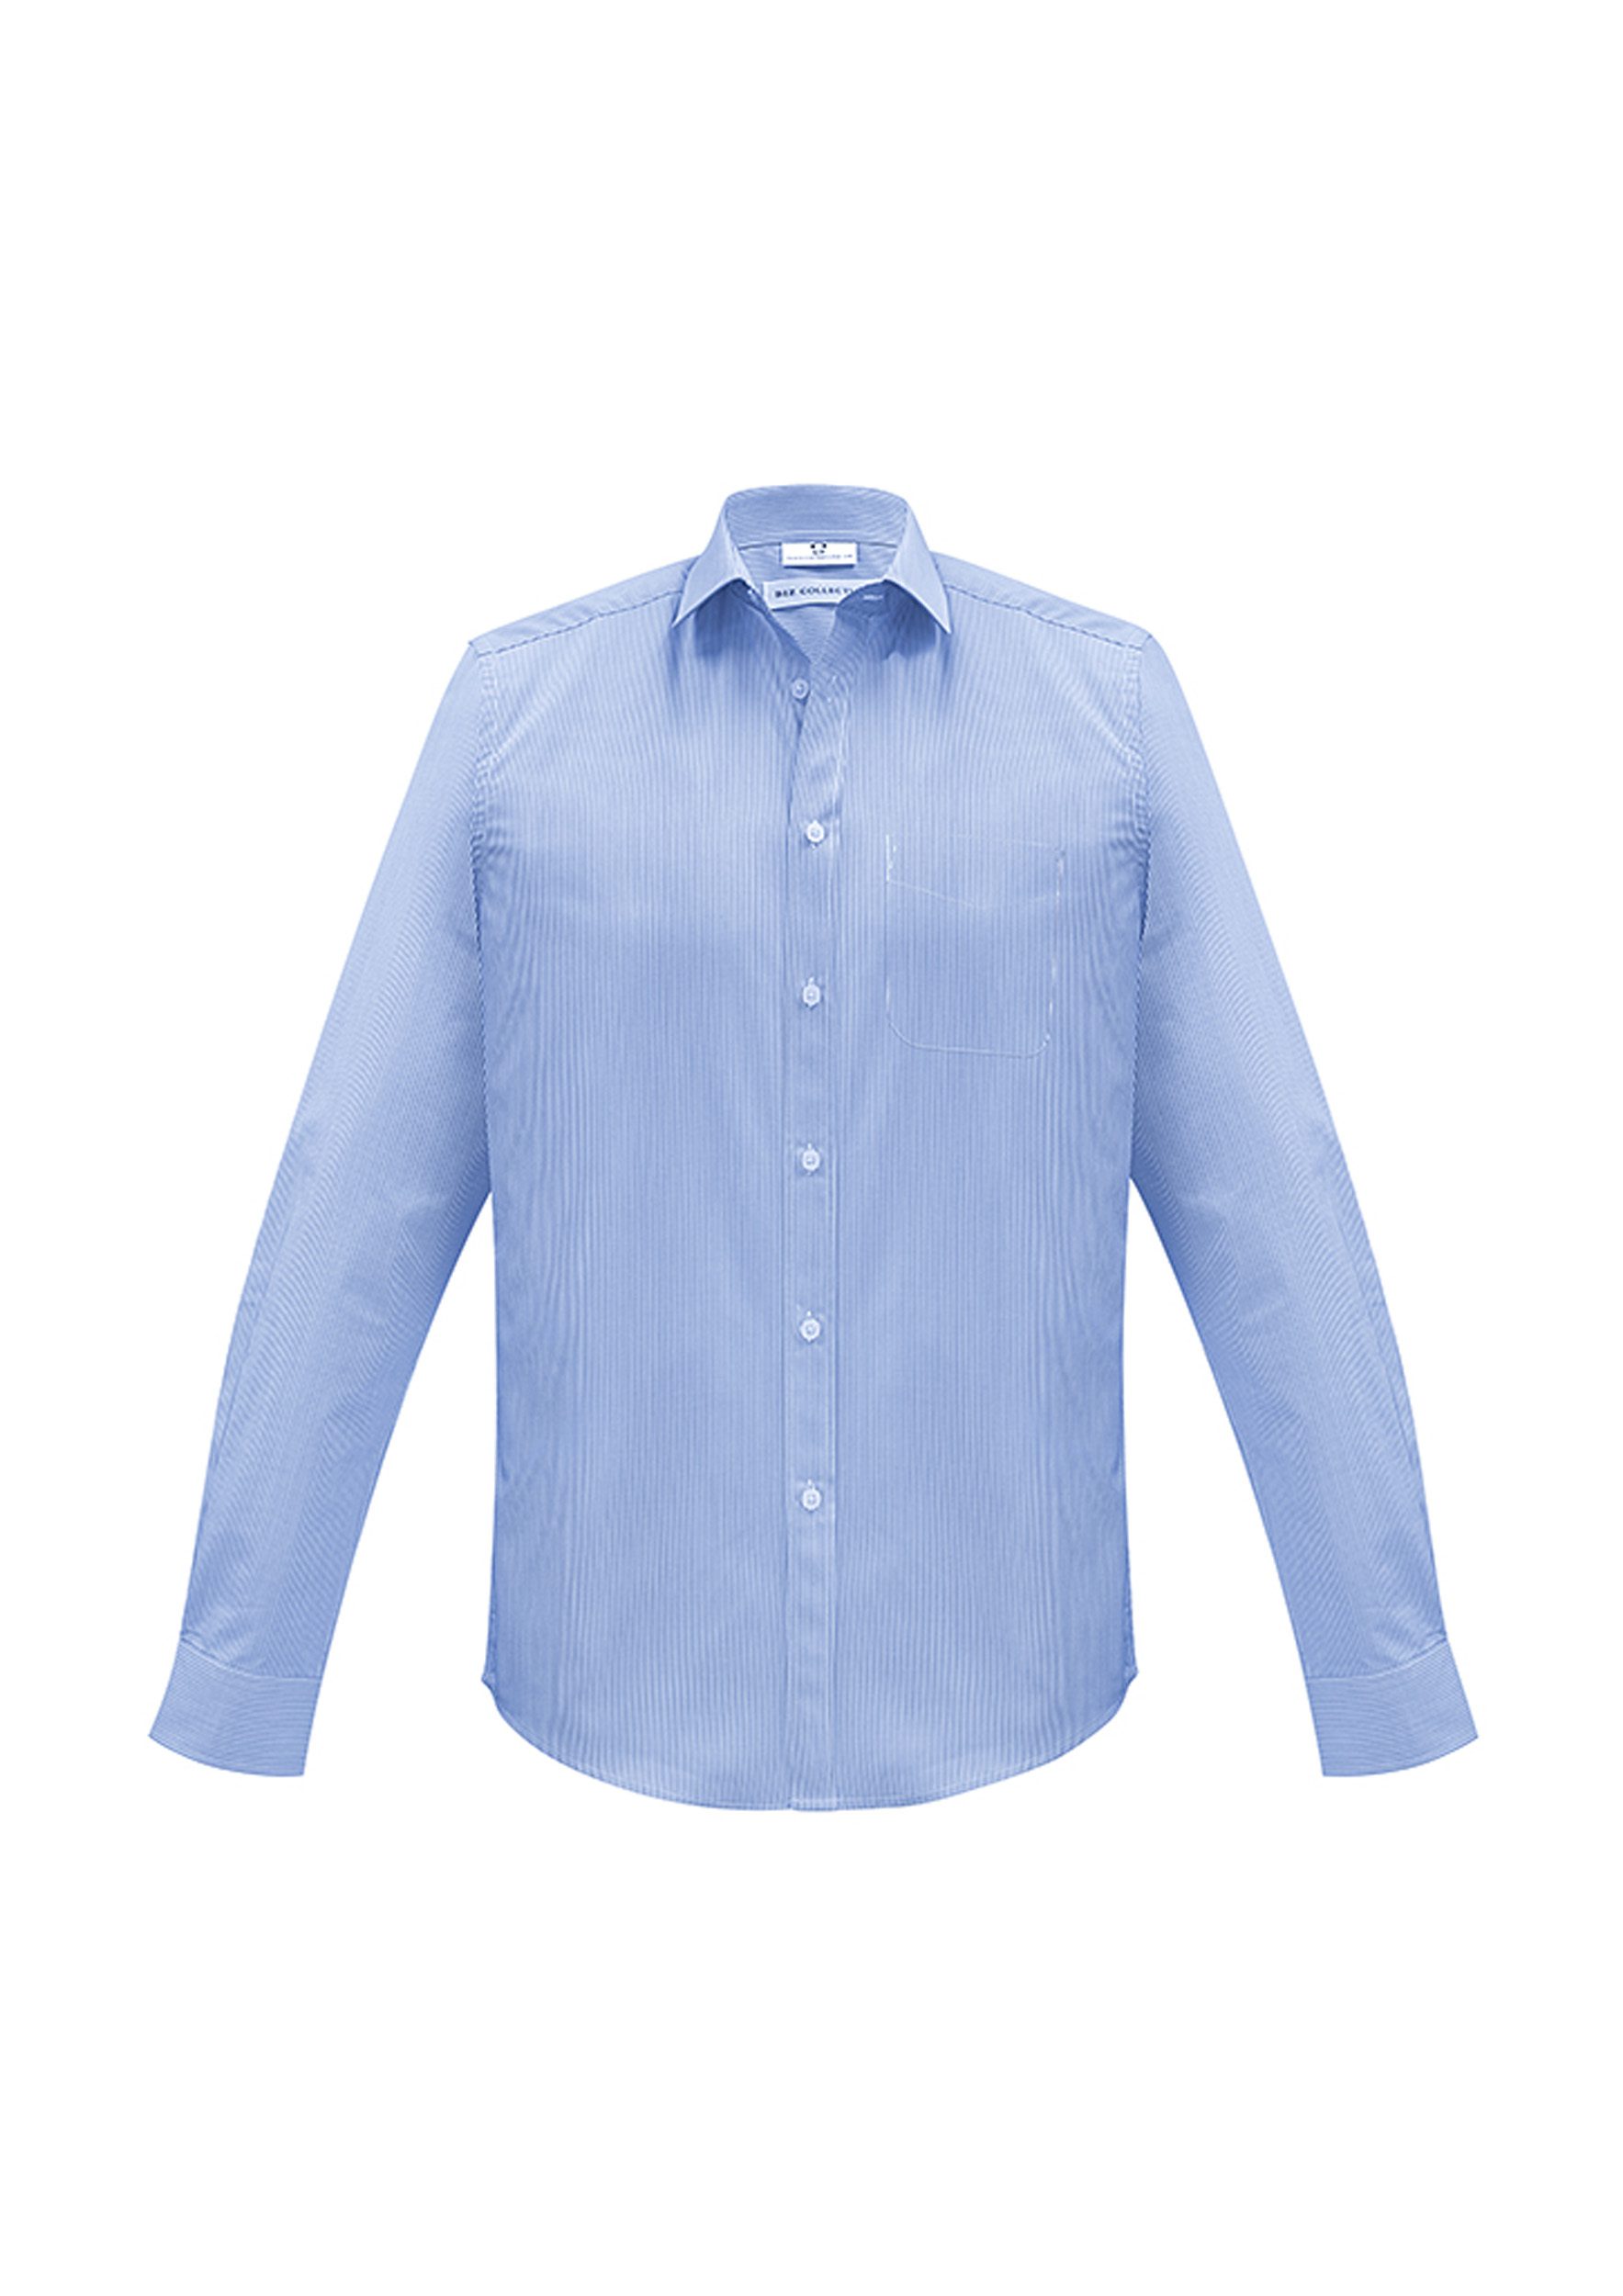 Biz Collection Mens Euro Long Sleeve Shirt #S812ML Blue